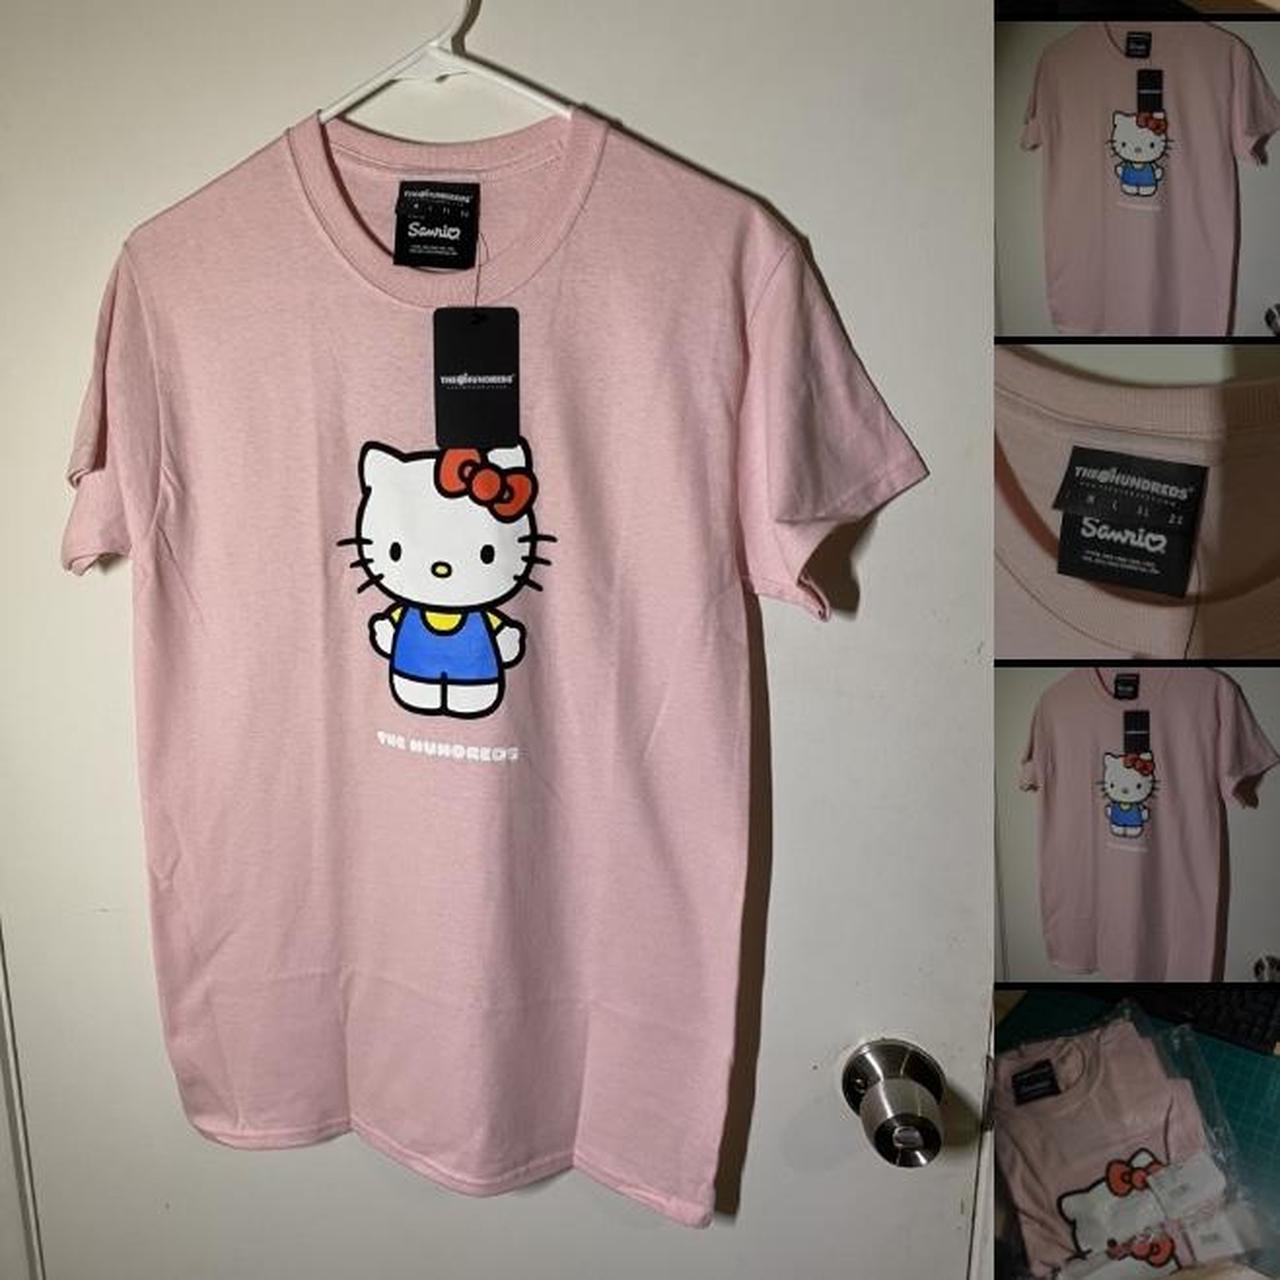 Sanrio Men's Pink and White T-shirt | Depop